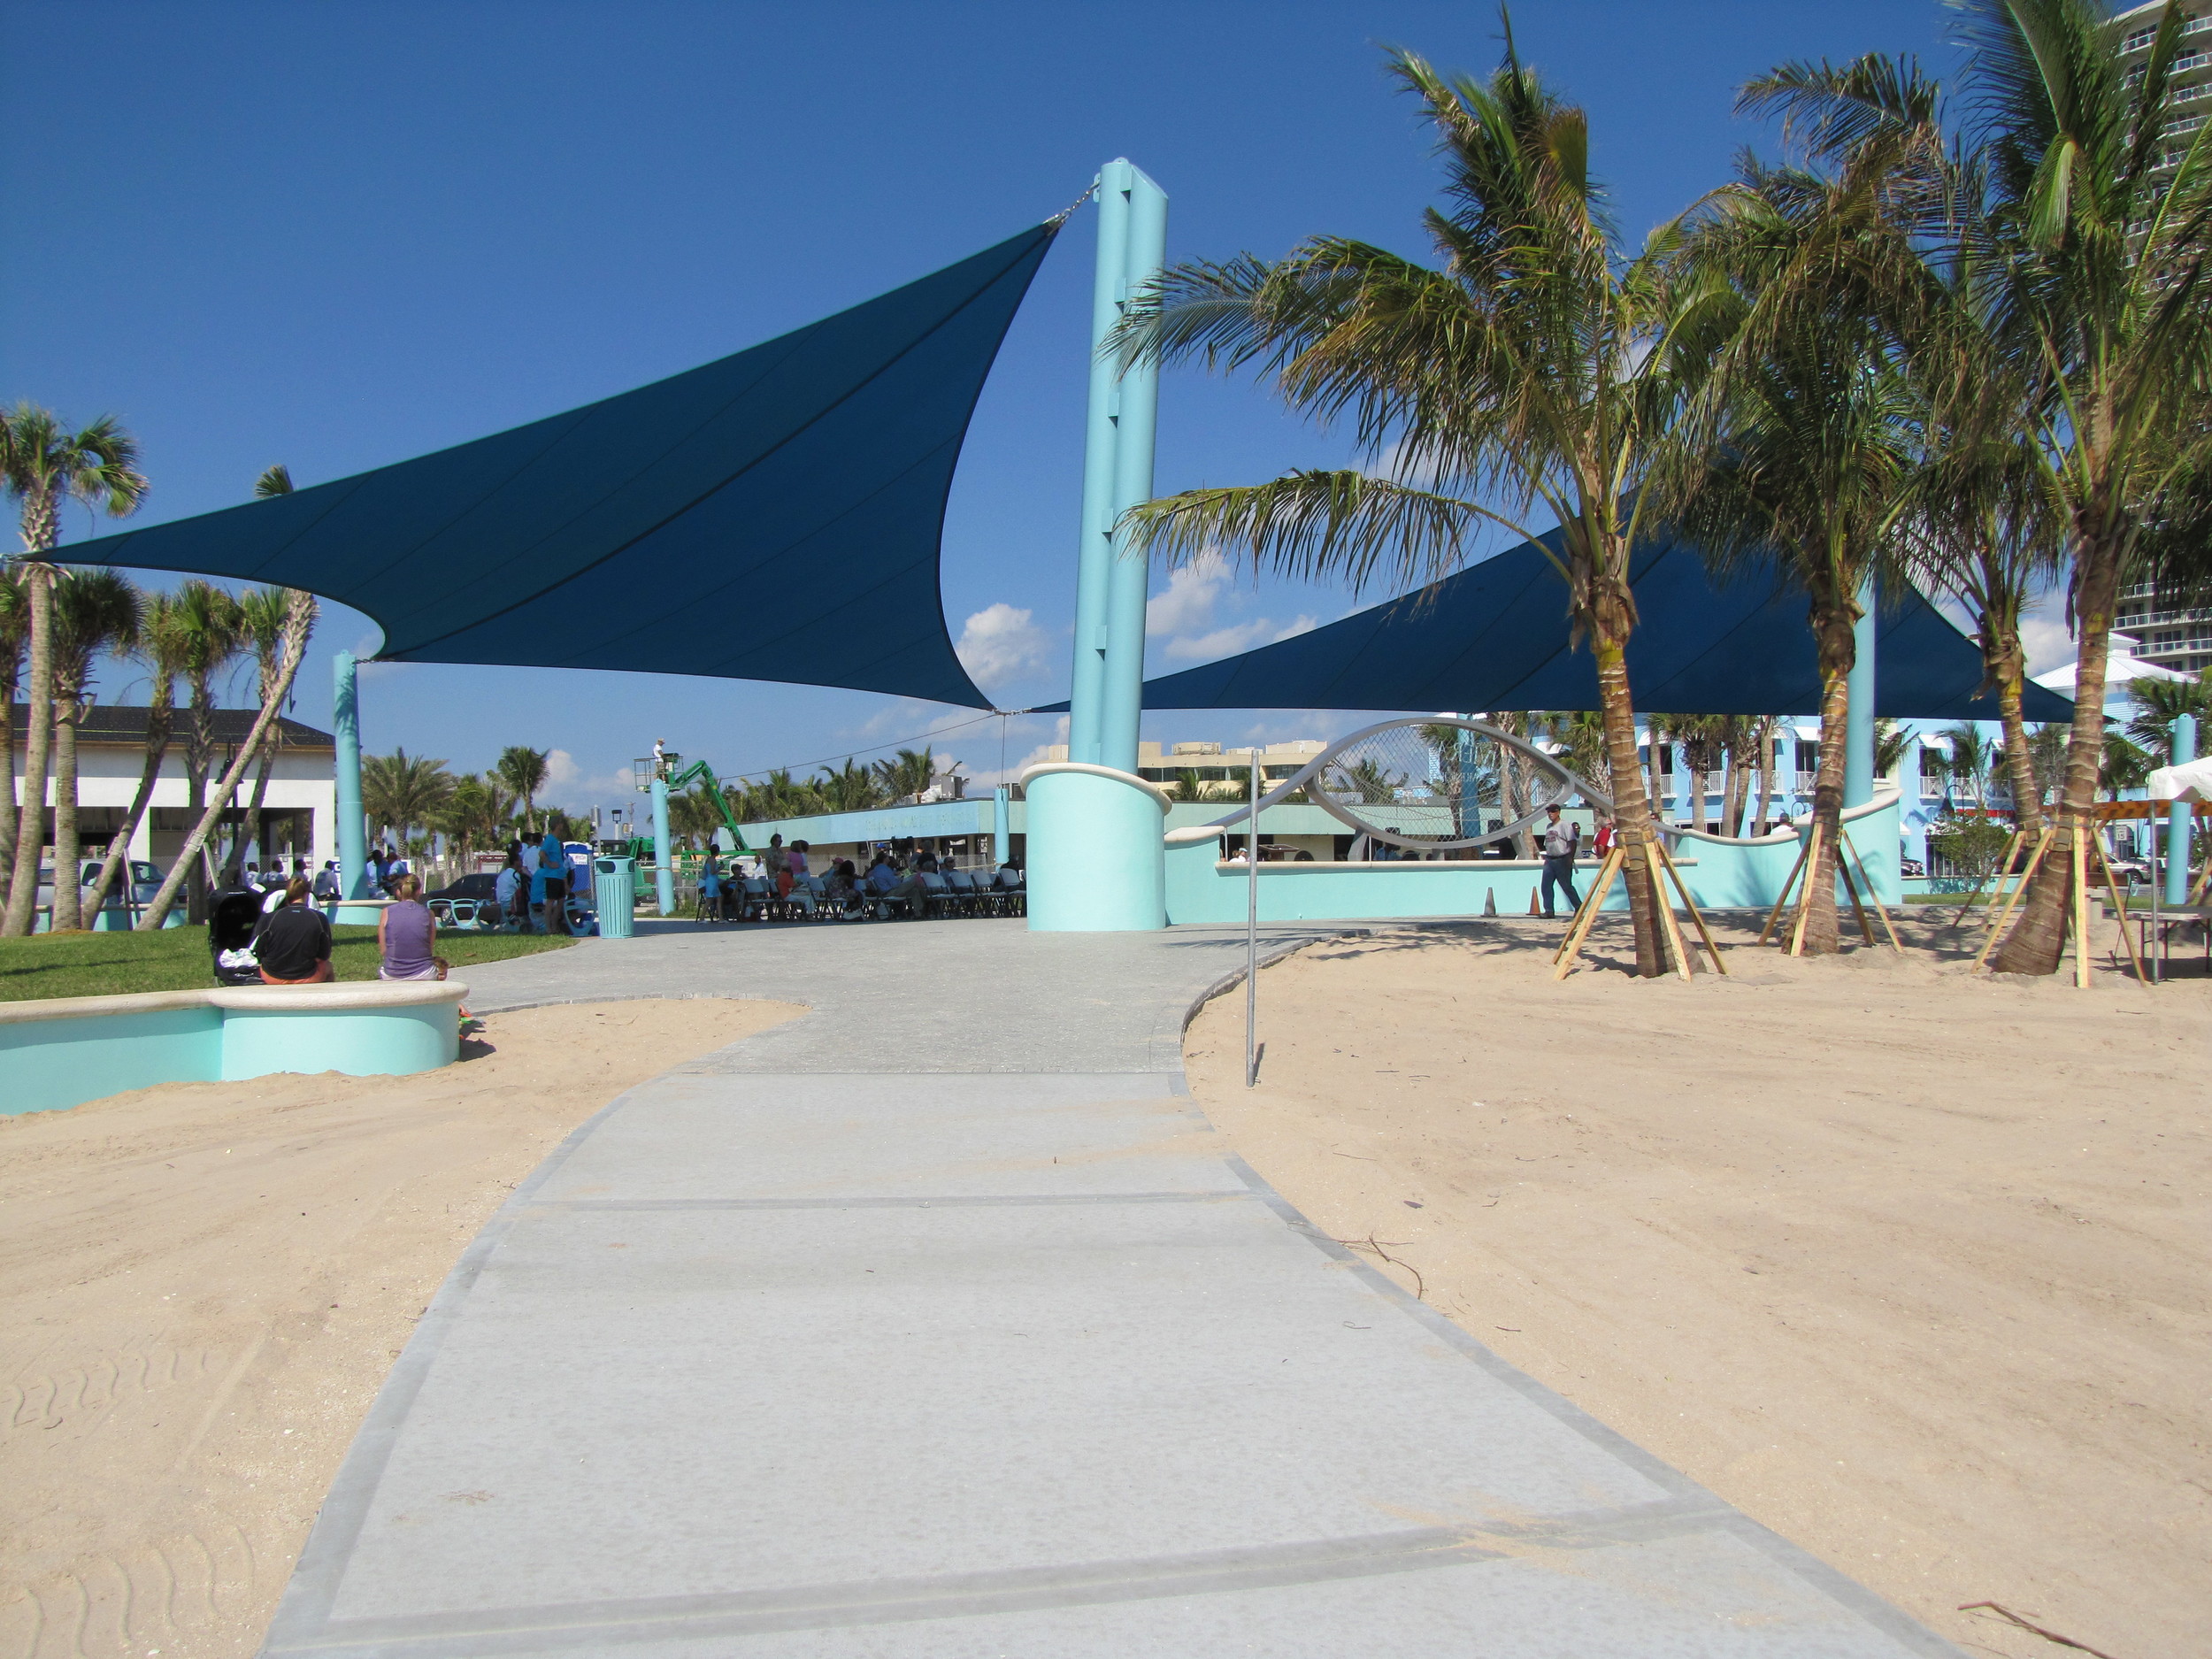 City of Riviera Beach Municipal Beach Park Ocean Mall Shade Sail Entry Opening.jpg